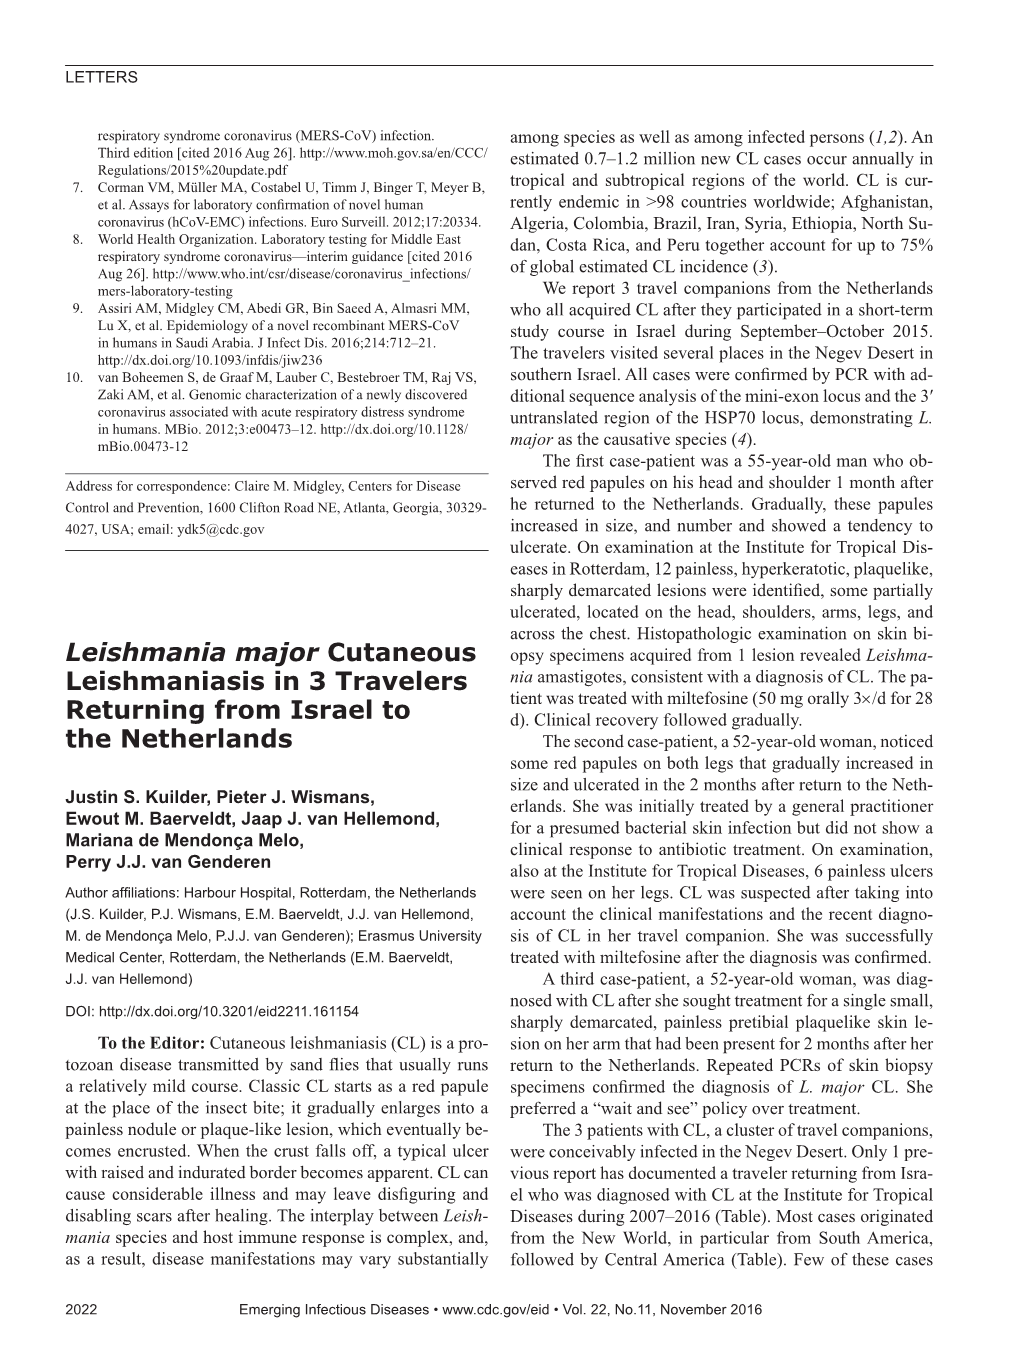 Leishmania Major Cutaneous Leishmaniasis in 3 Travelers